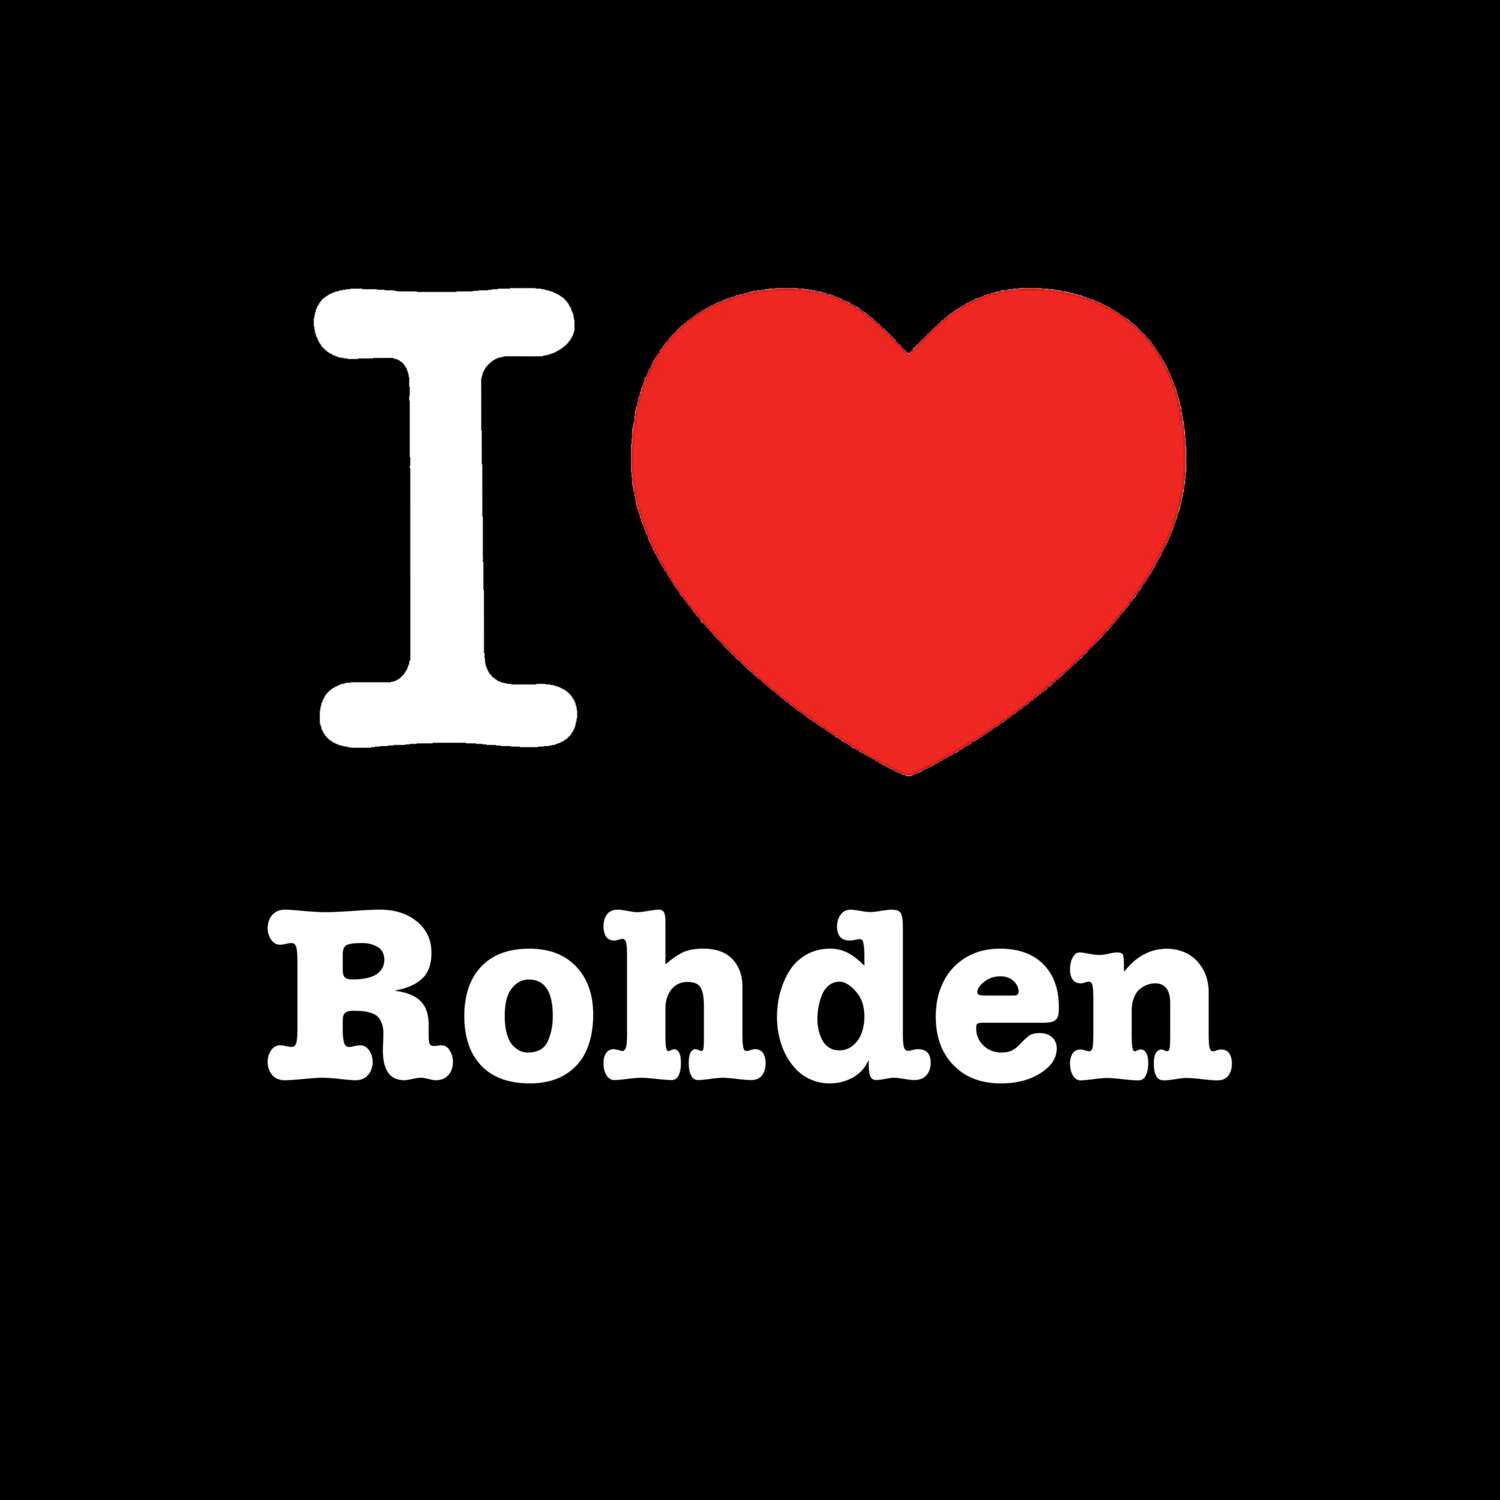 Rohden T-Shirt »I love«